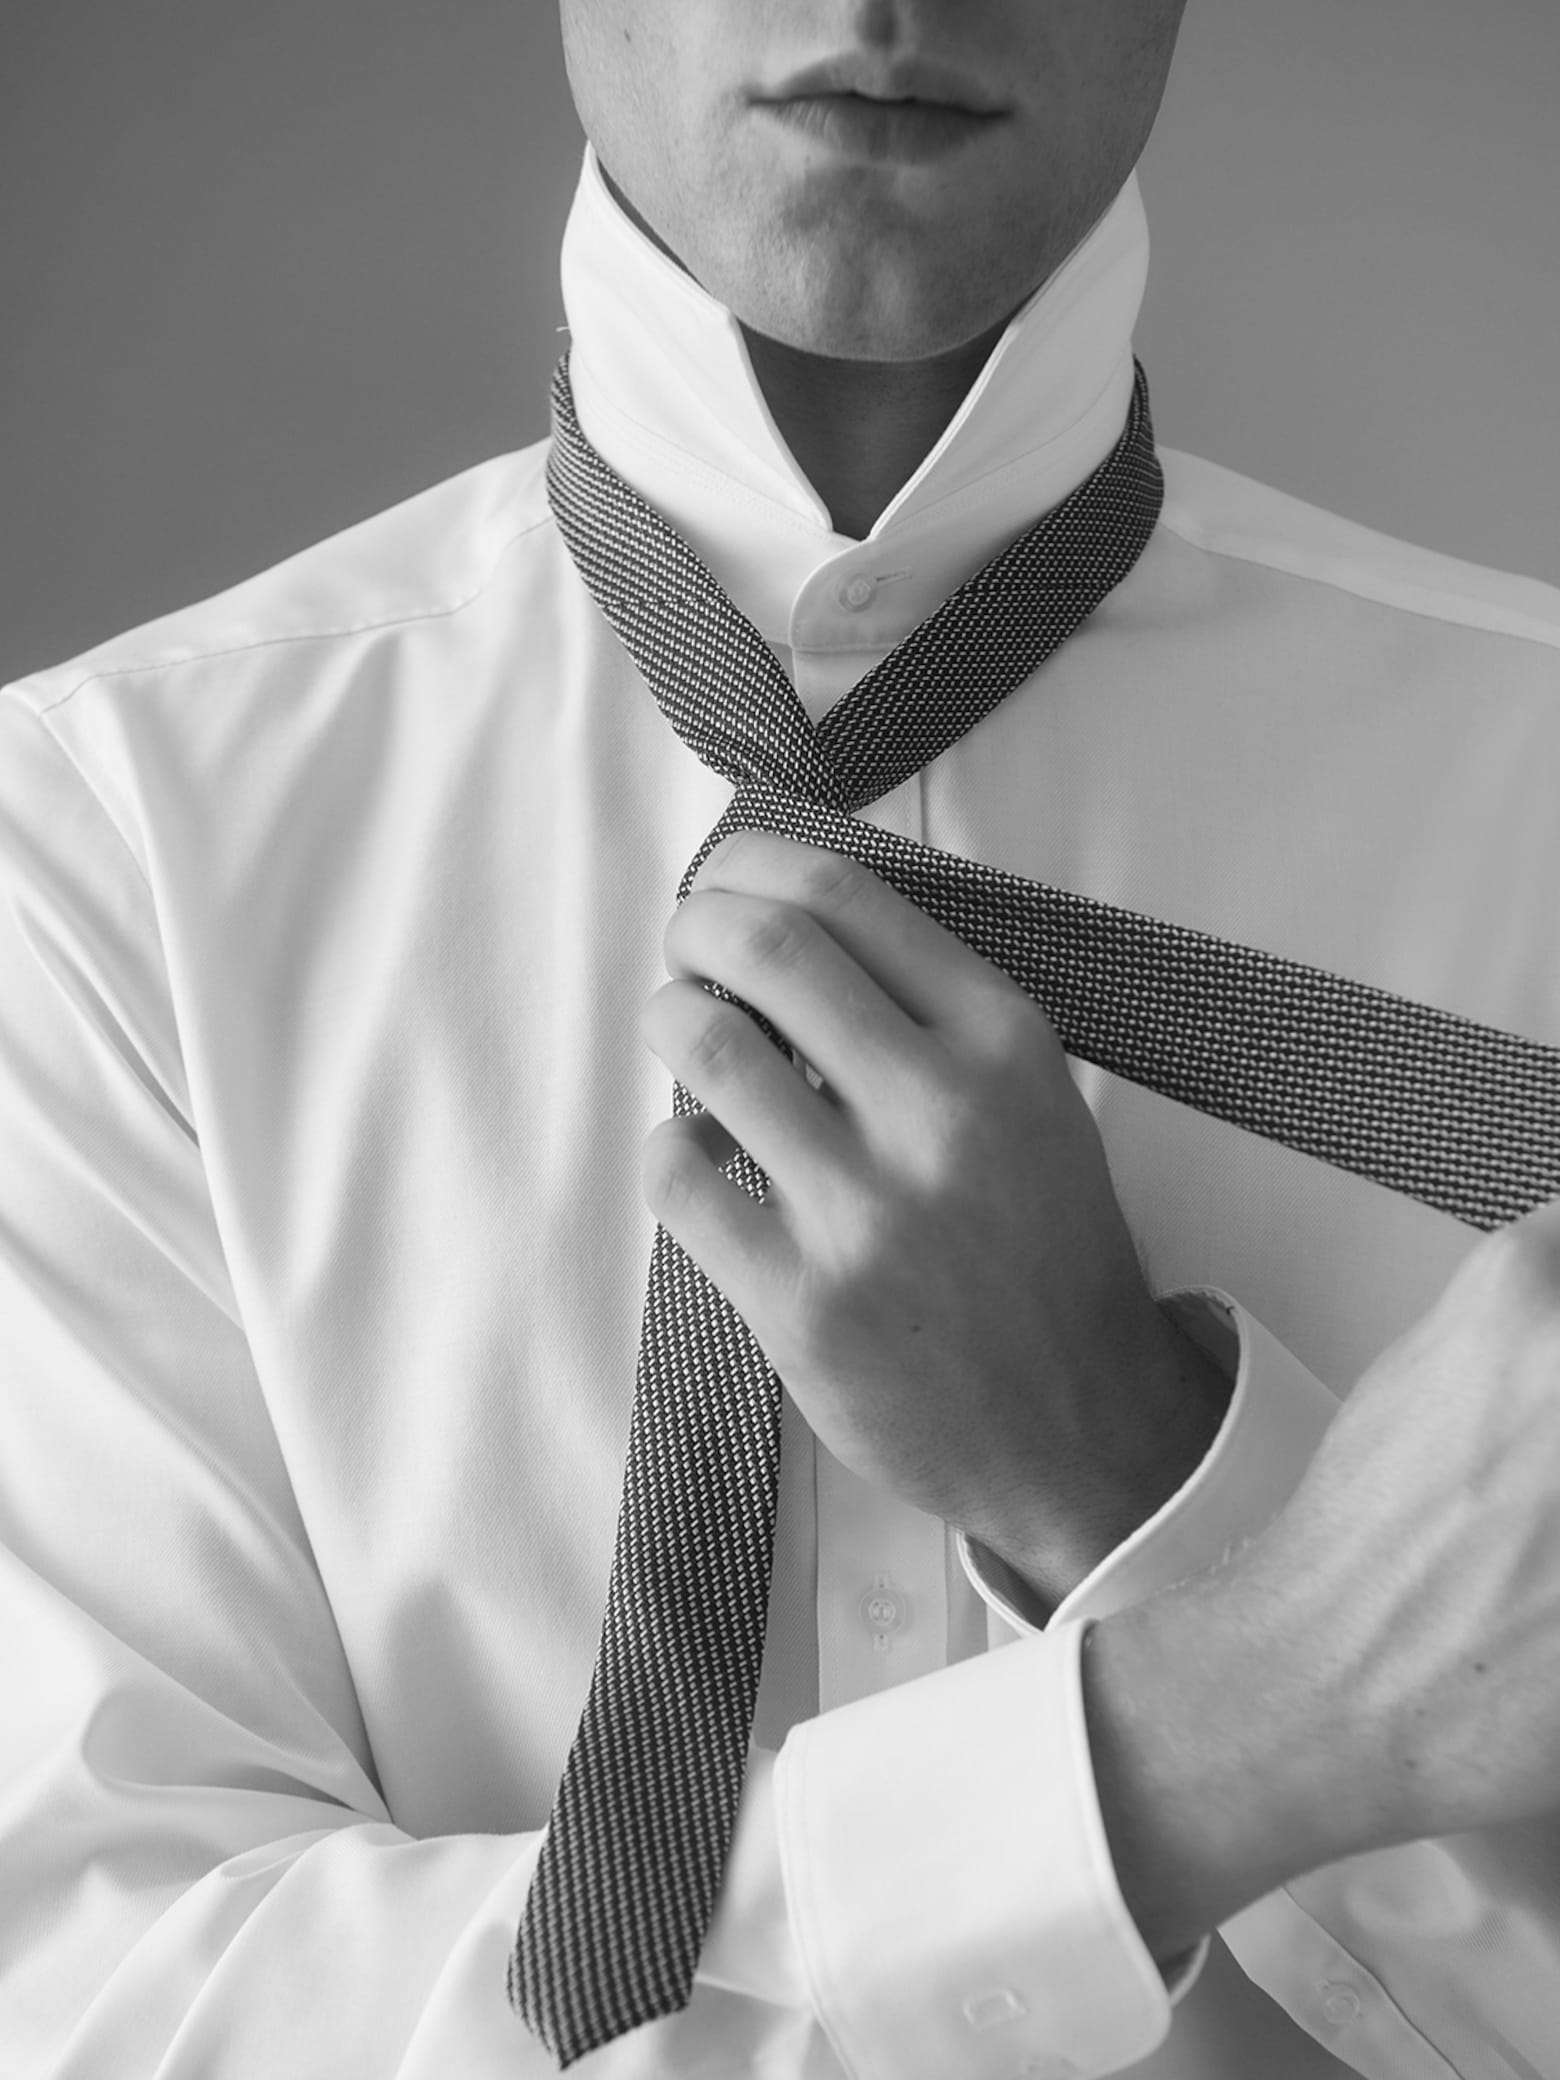 Korak po korak Kako zavezati kravato